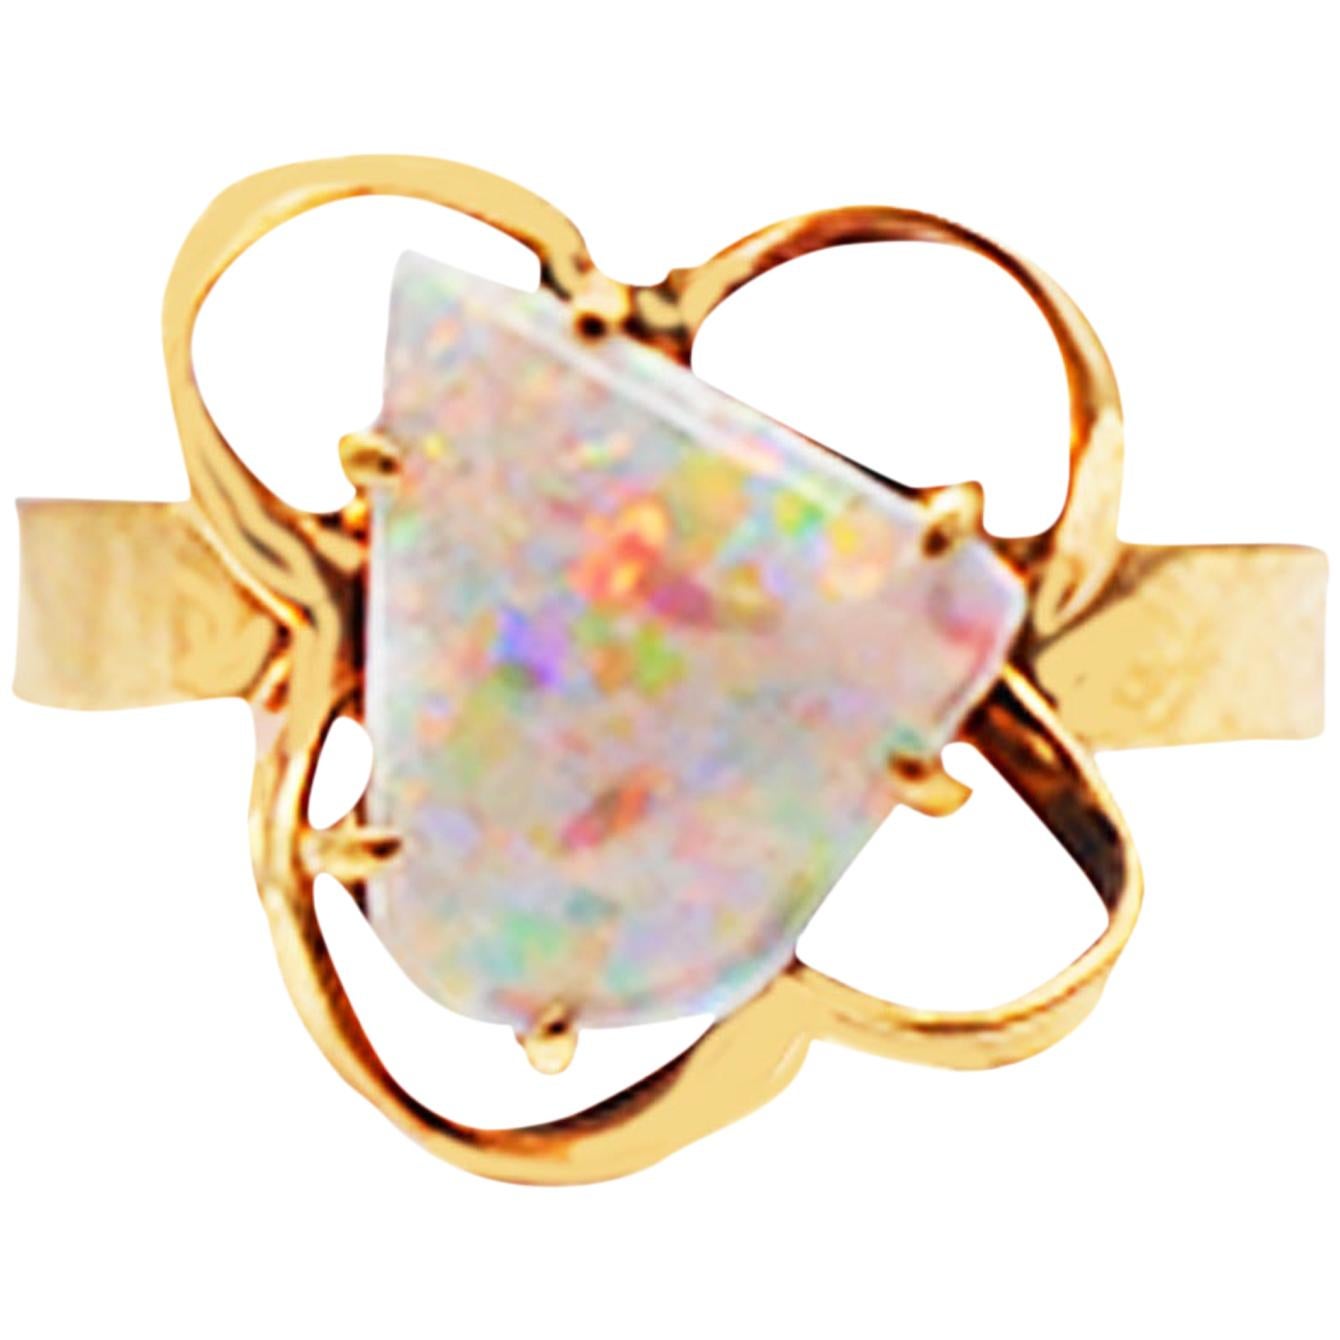 Australian Fire Opal Ring Organic Artisan 5 Carat Gemstone